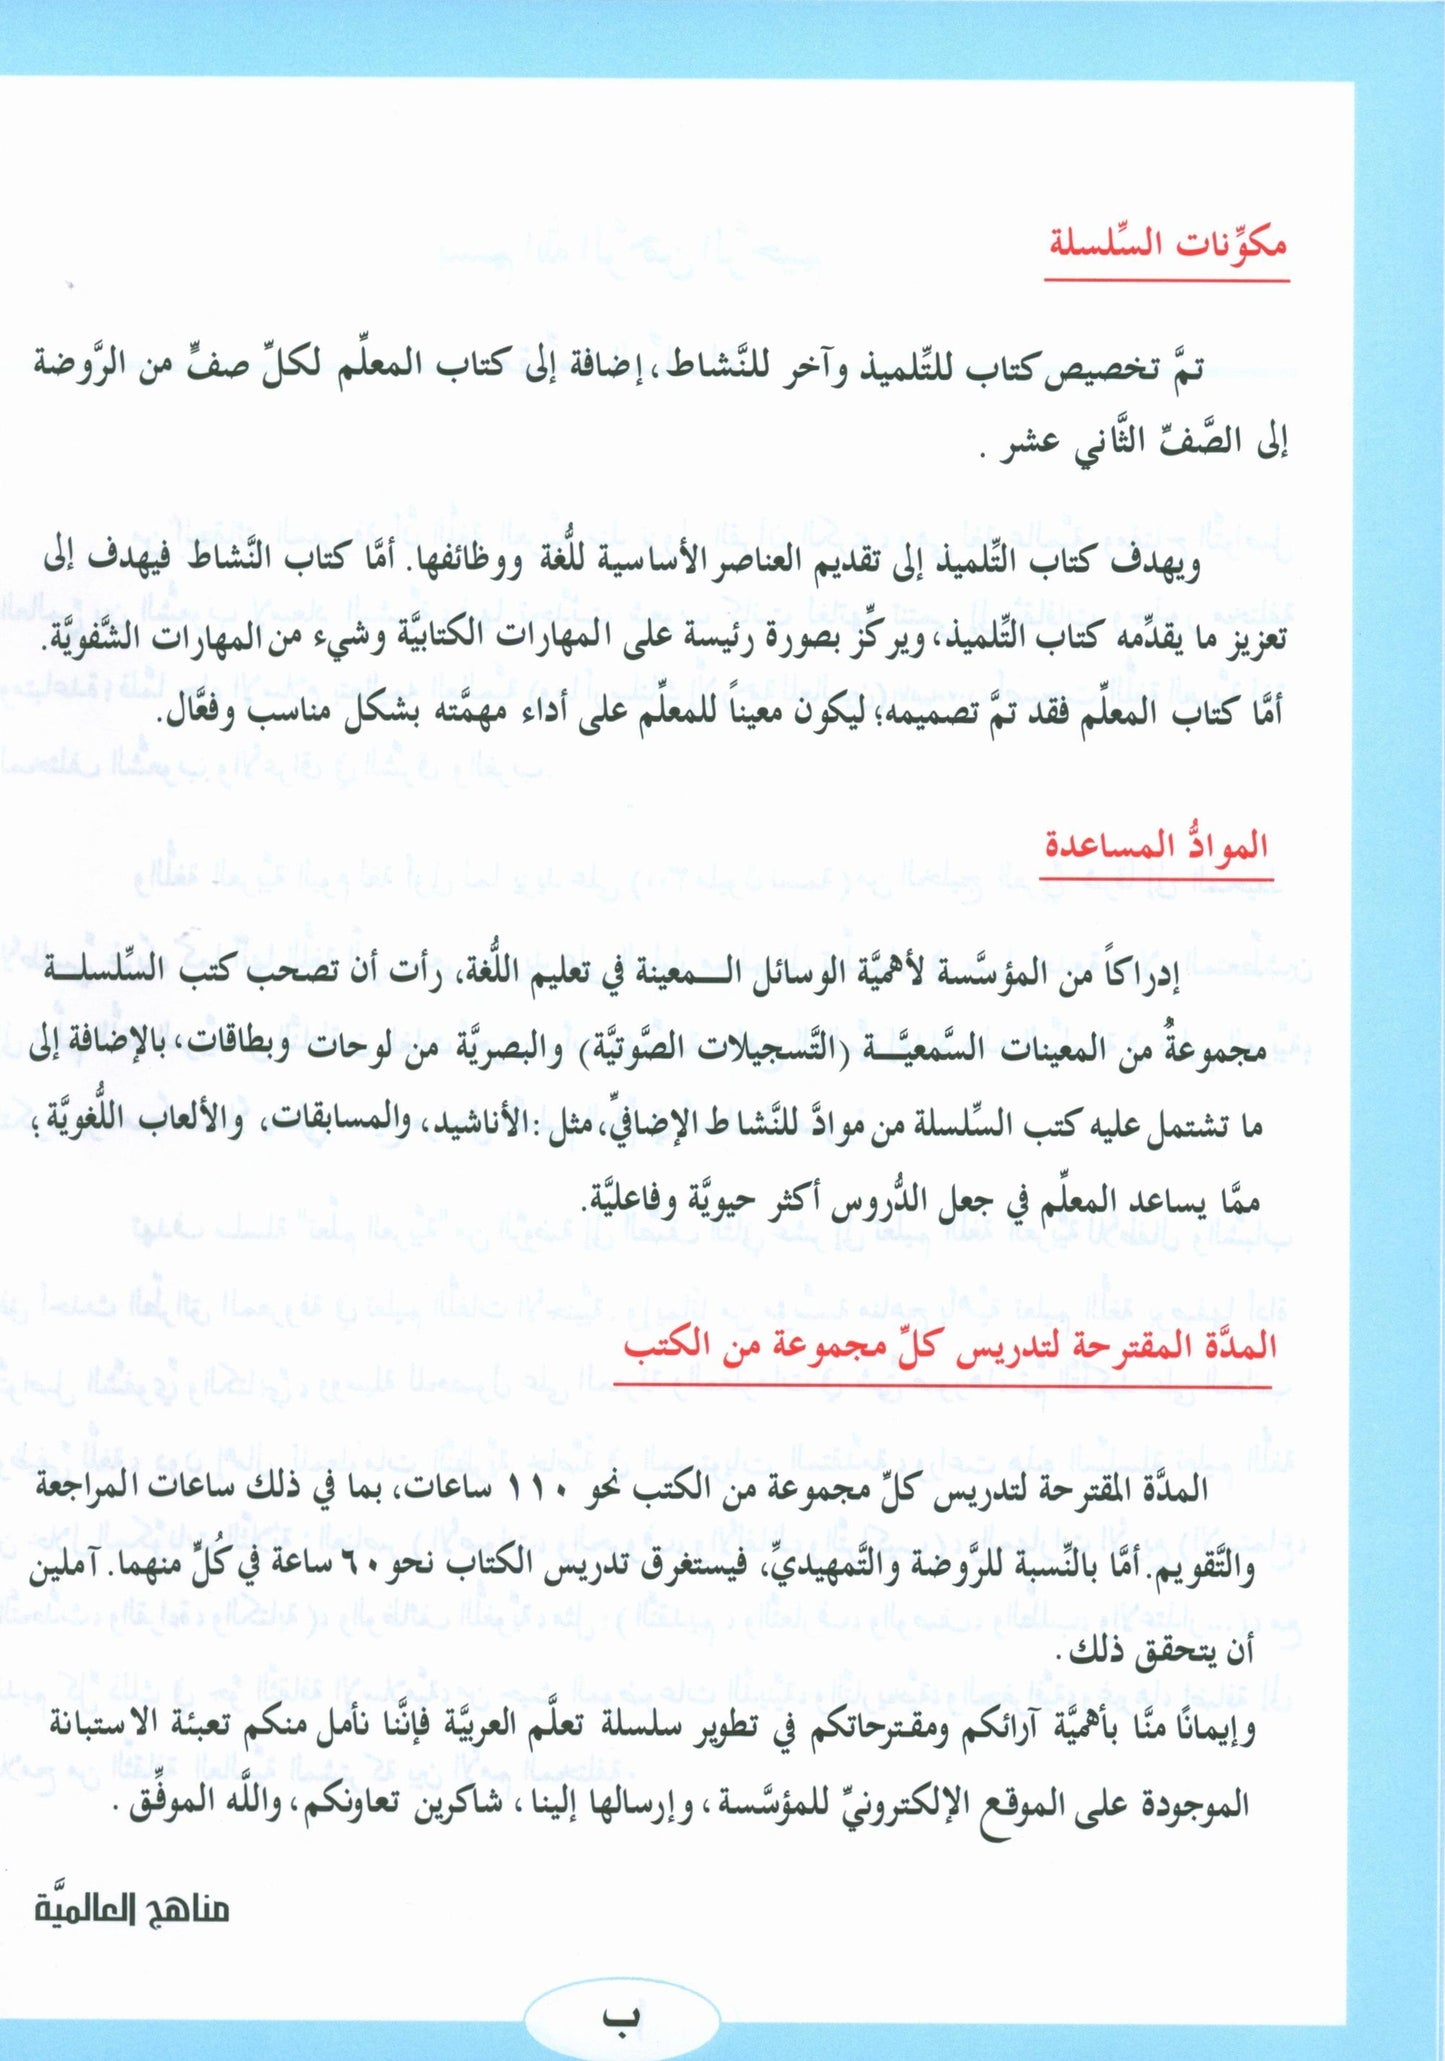 ICO Learn Arabic - Textbook - Level  2 Part 1 - تعلم العربية